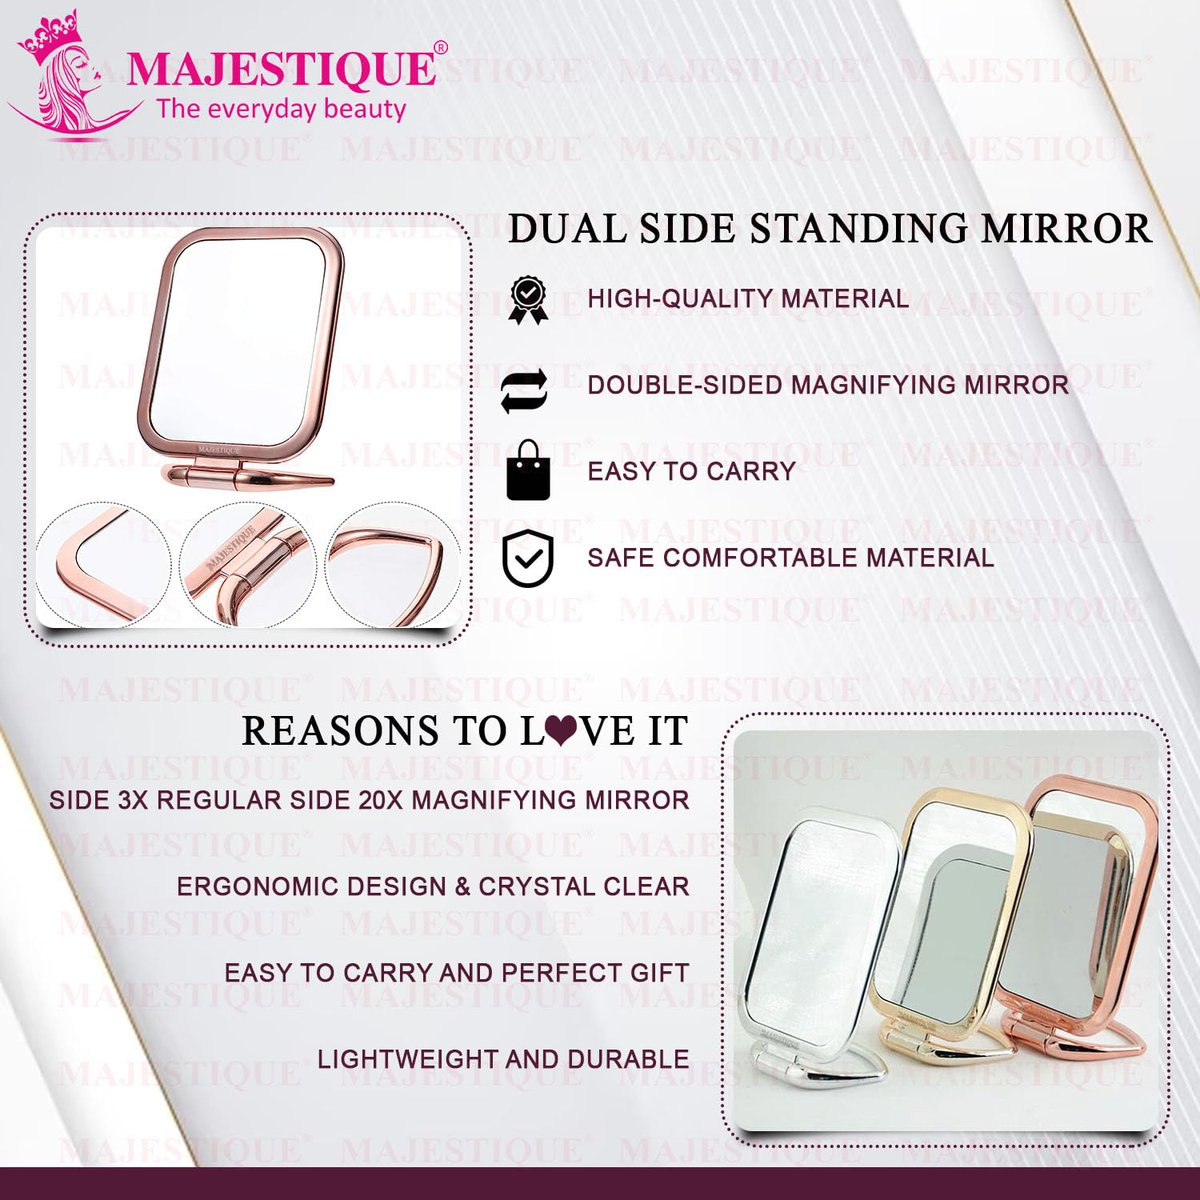 MAJESTIQUE Tabletop Mount Double Side Makeup Mirror, 1X/20X Square Zoom Mirror, #MakeupMirror
#VanityMirror #BeautyTools #ZoomMirror #MakeupVanity #anushkasharma #BeautyRoom
#GlamRoom #priyankachopra #SelfcareEssentials
#BeautyMirror #MakeupAddicts #BeautyGuru
#MakeupLovers